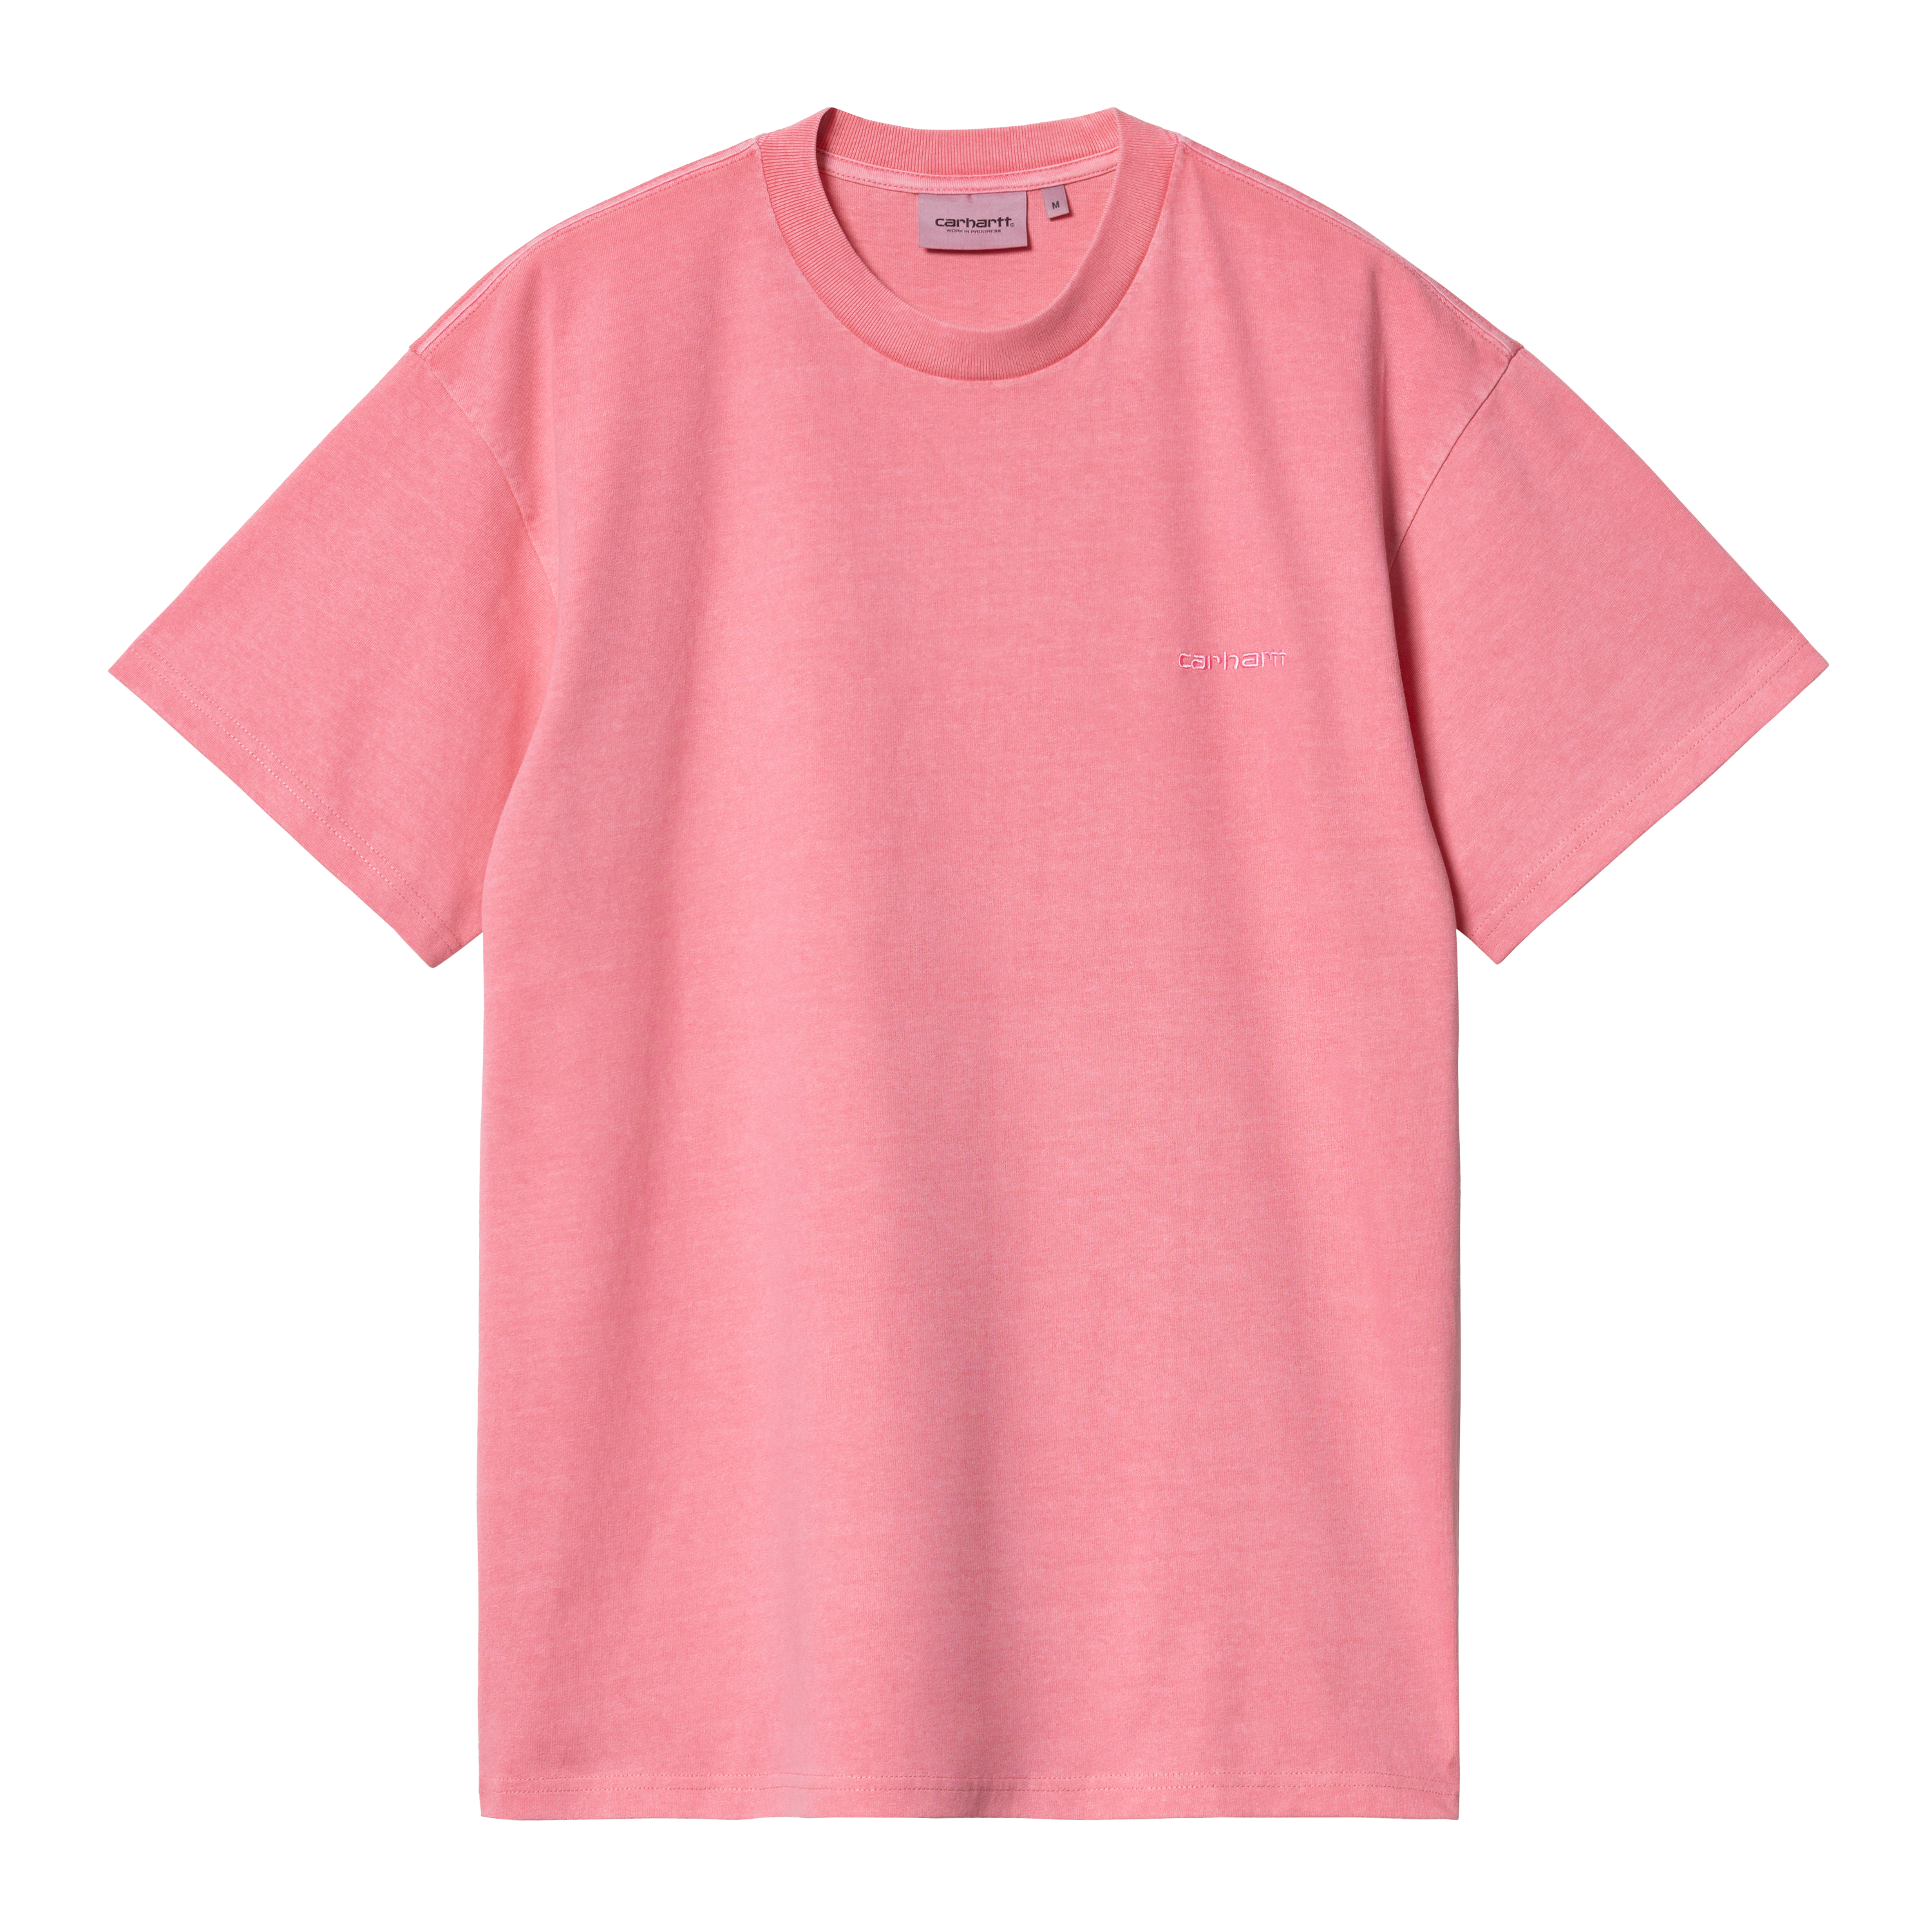 Carhartt WIP Short Sleeve Duster Script T-Shirt in Pink